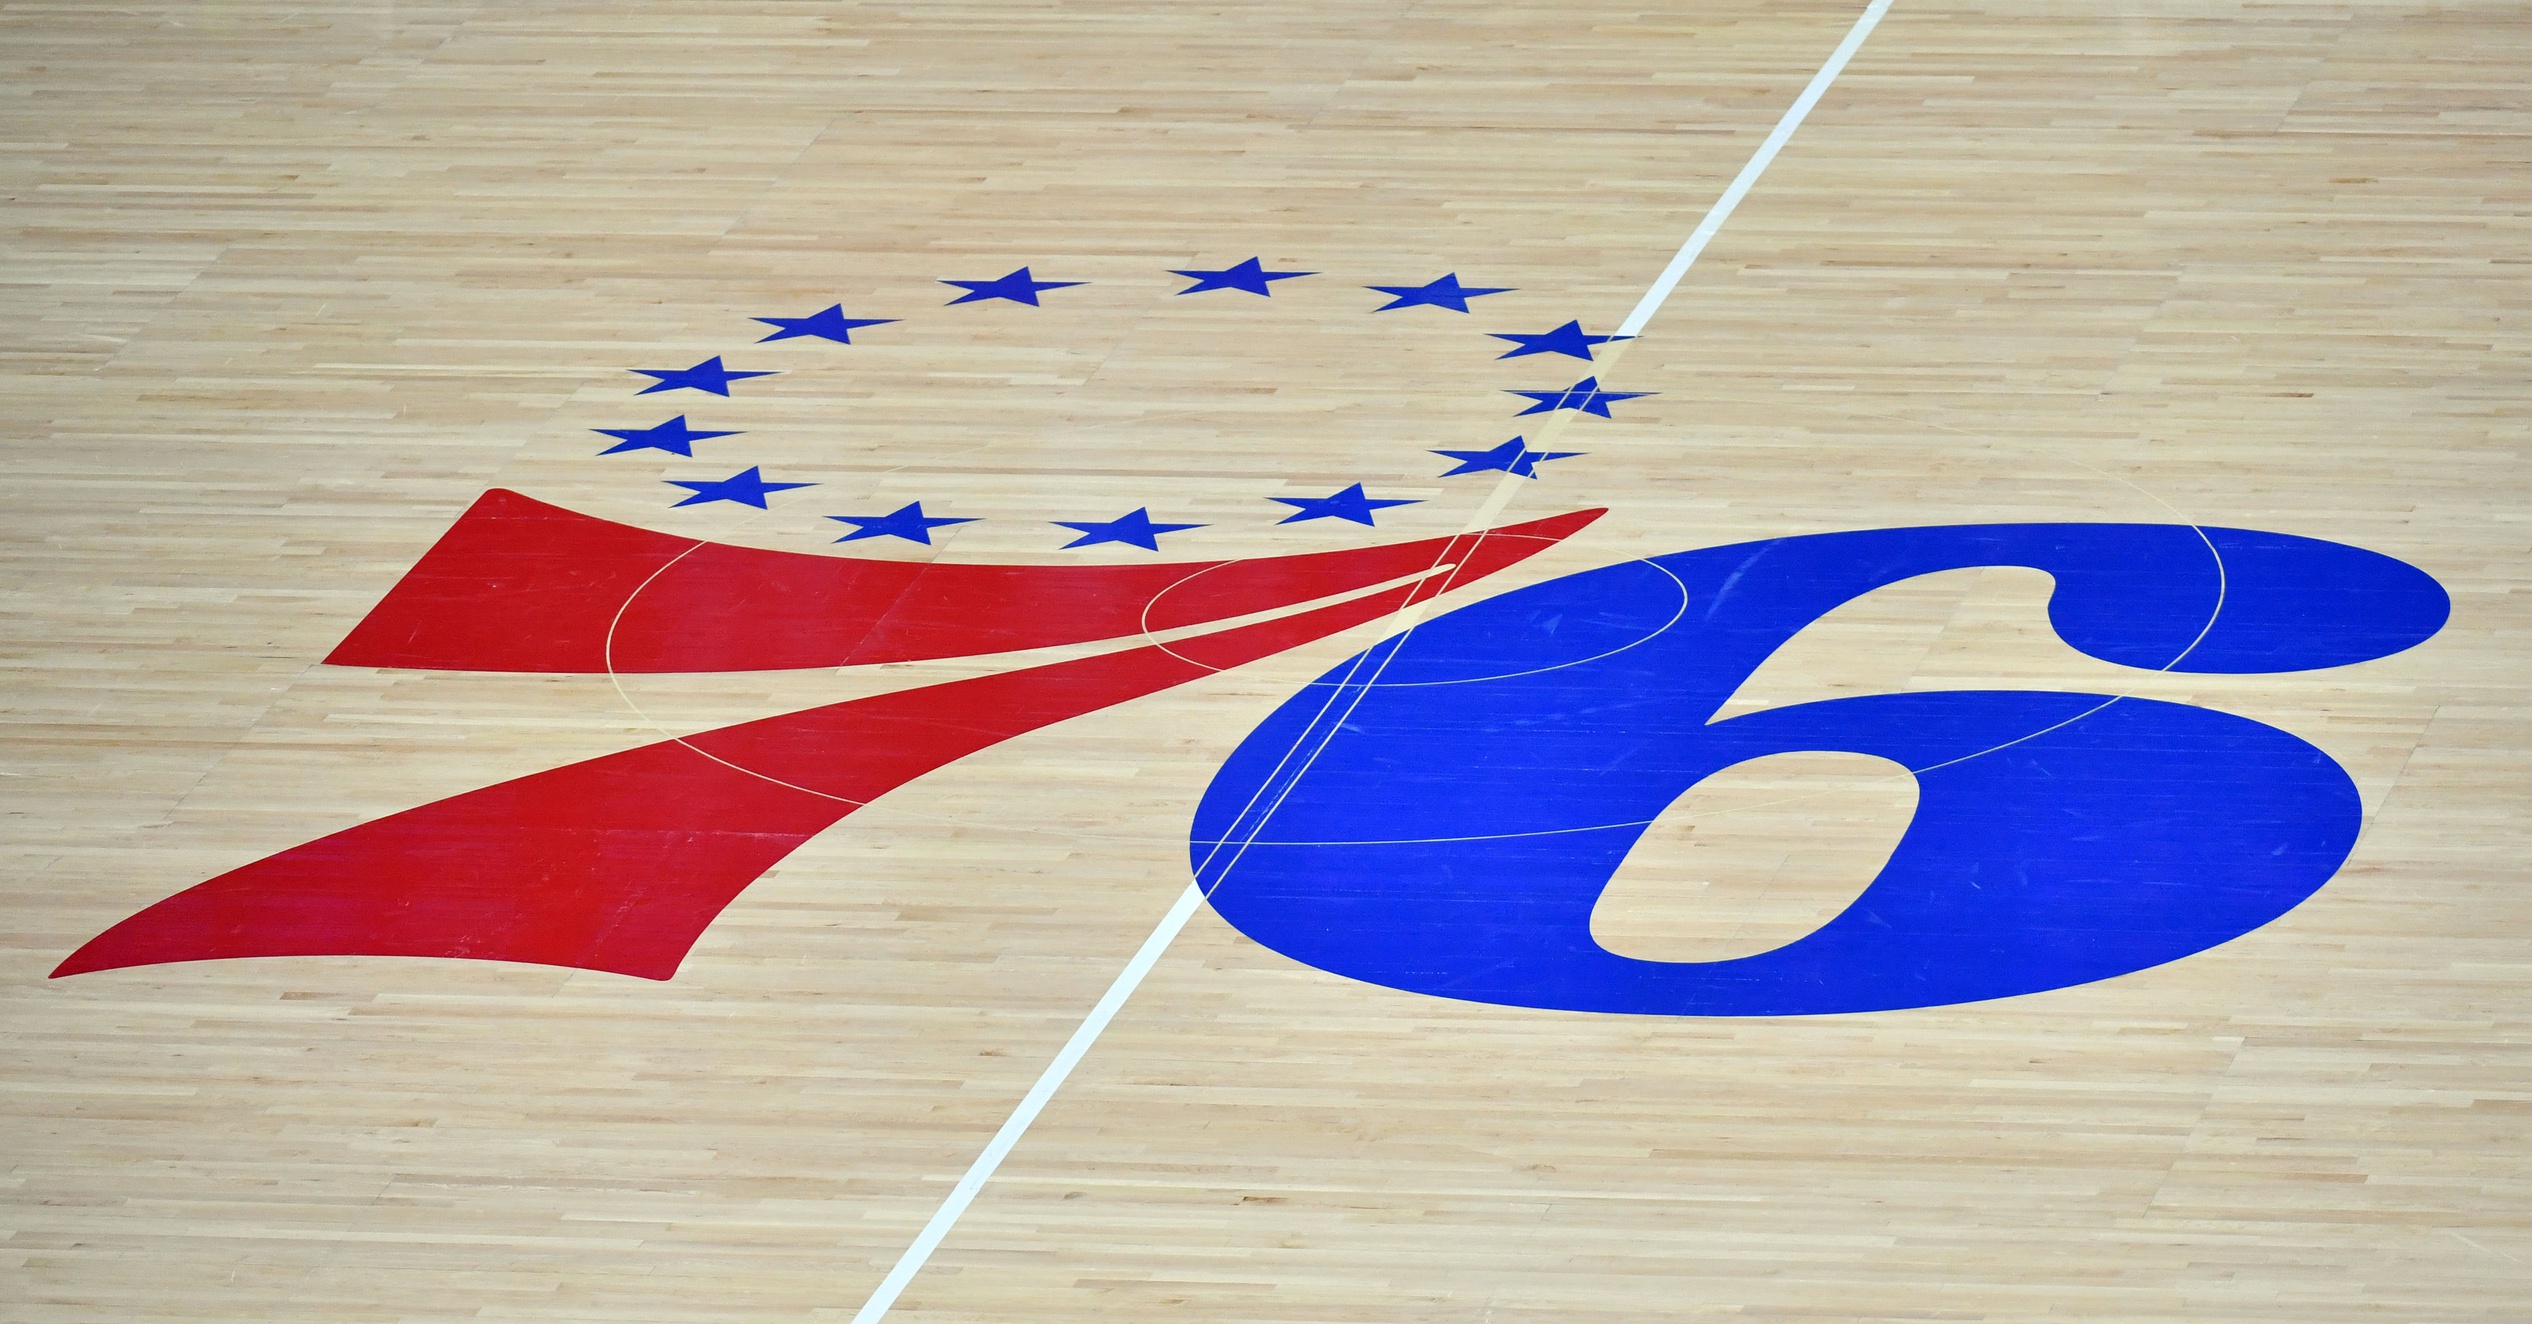 Philadelphia 76ers logo on the hardwood court against the San Antonio Spurs at Wells Fargo Center.